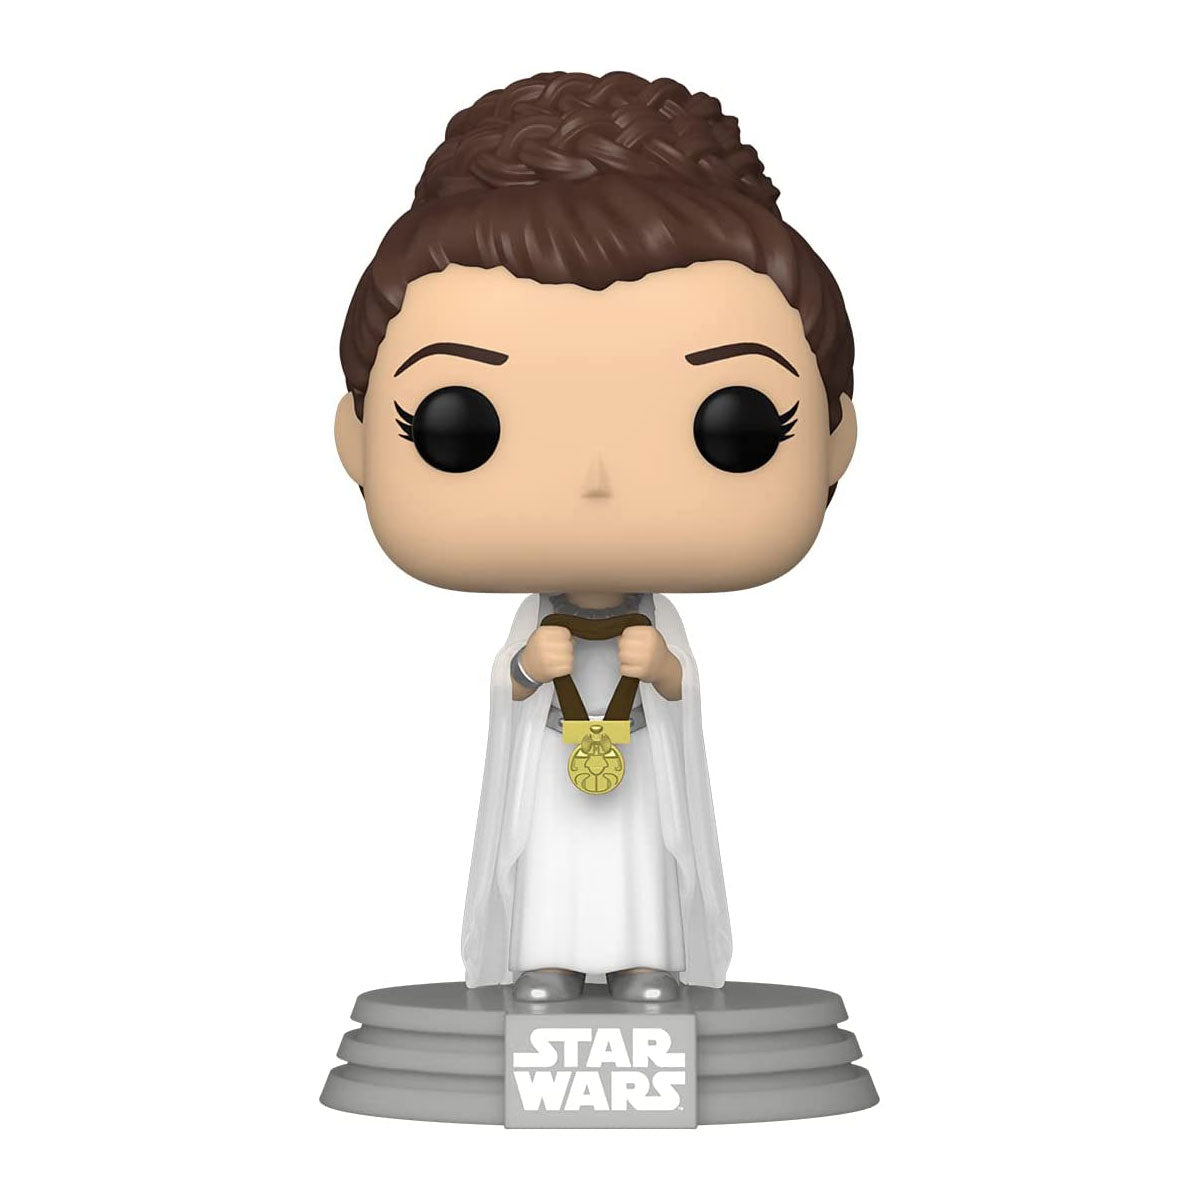 Princess Leia - Yavin #459 Star Wars Funko Pop! Amazon Esclusive